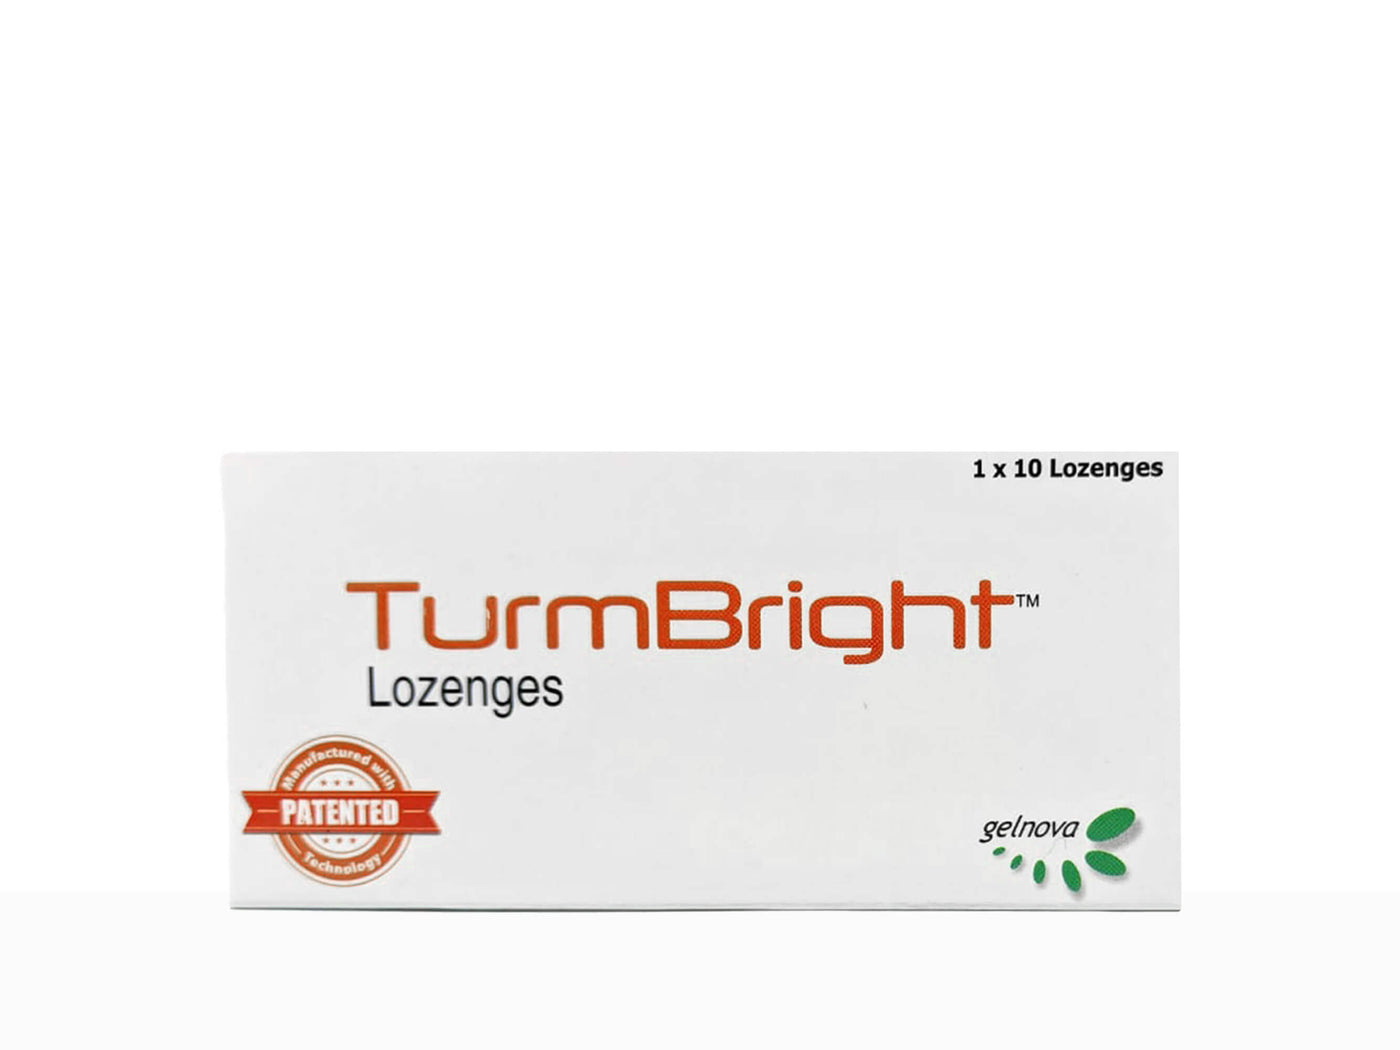 TurmBright Lozenges